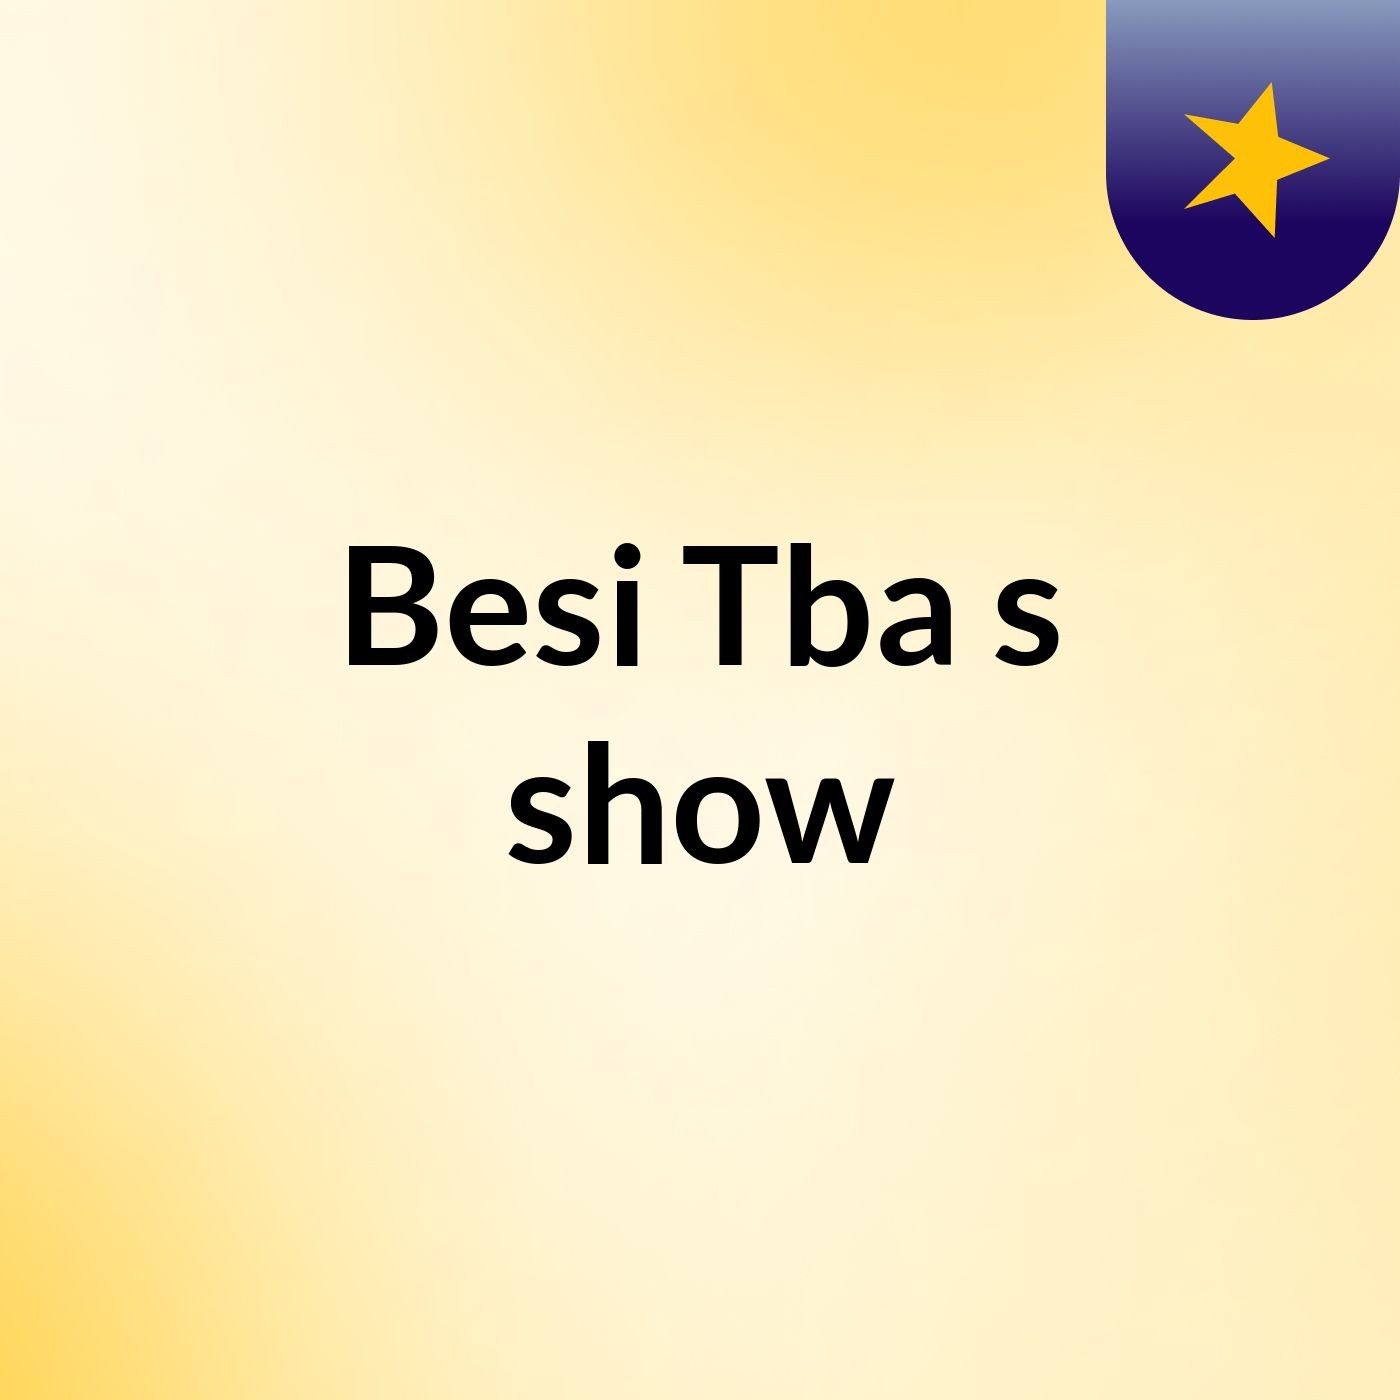 Besi Tba's show